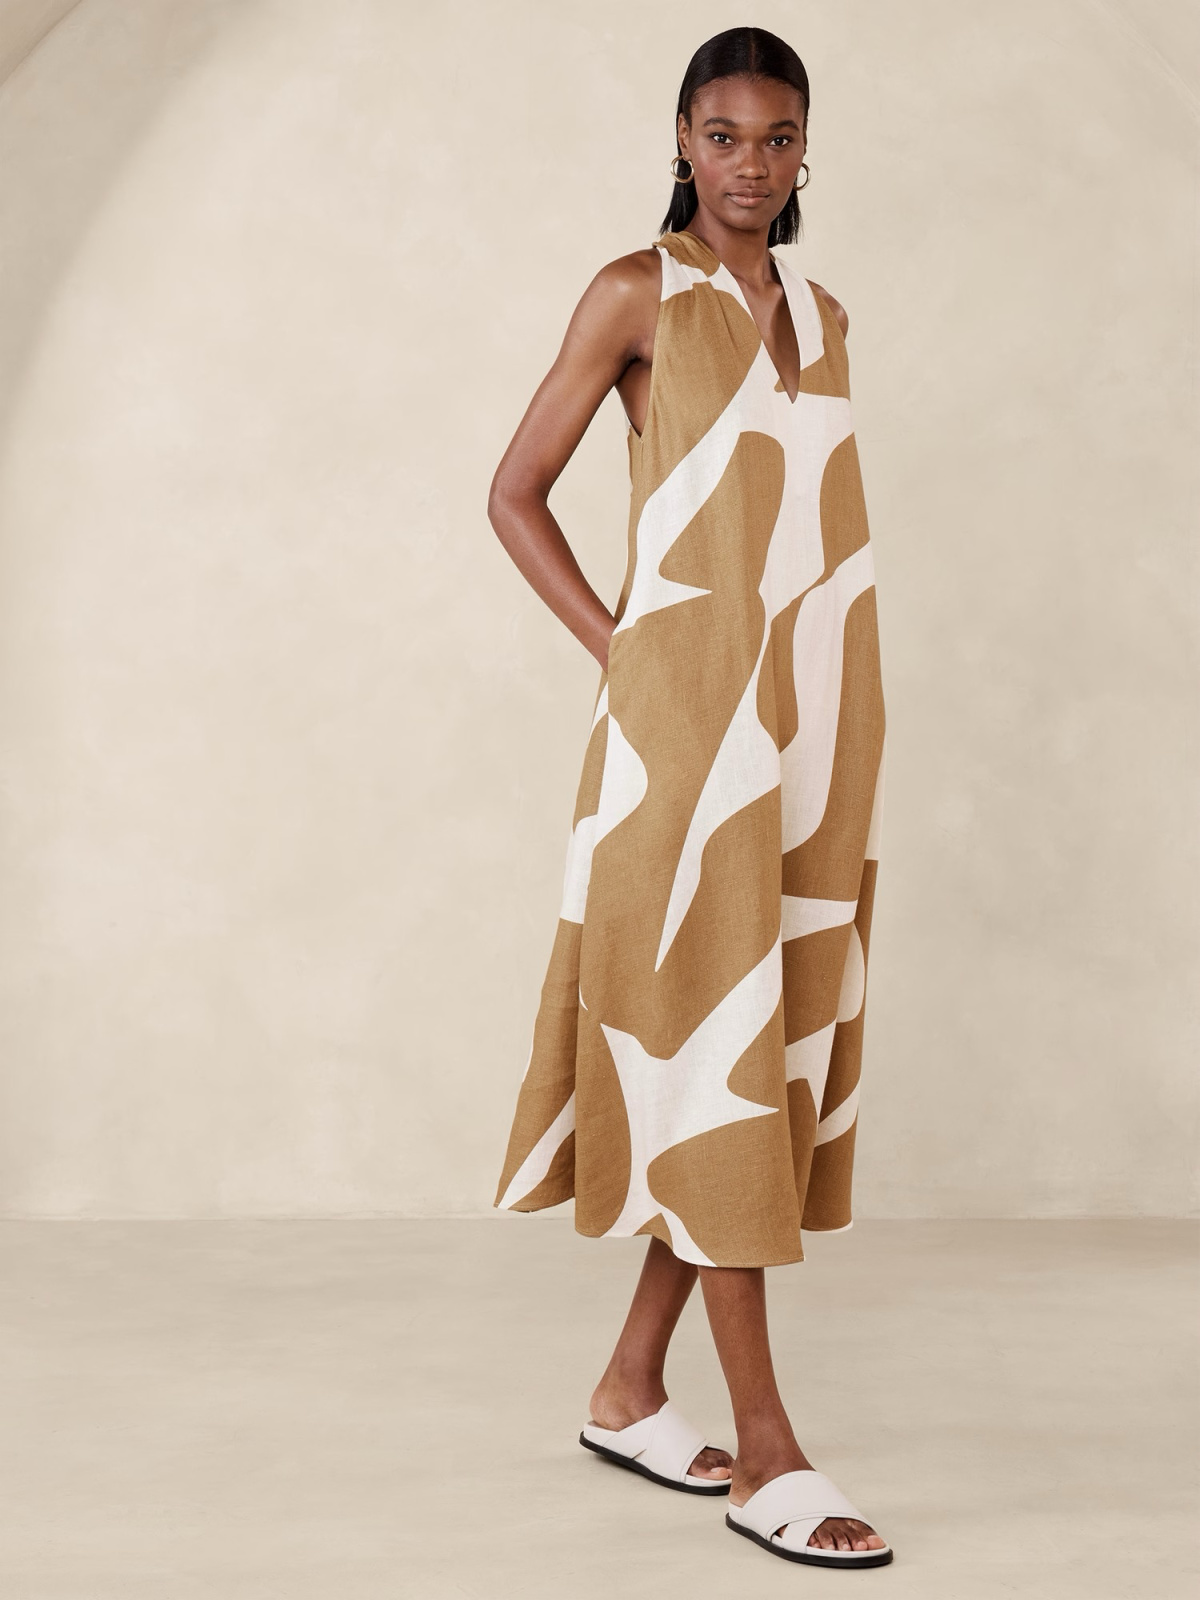 Model wearing Banana Republic giraffe print linen dress.